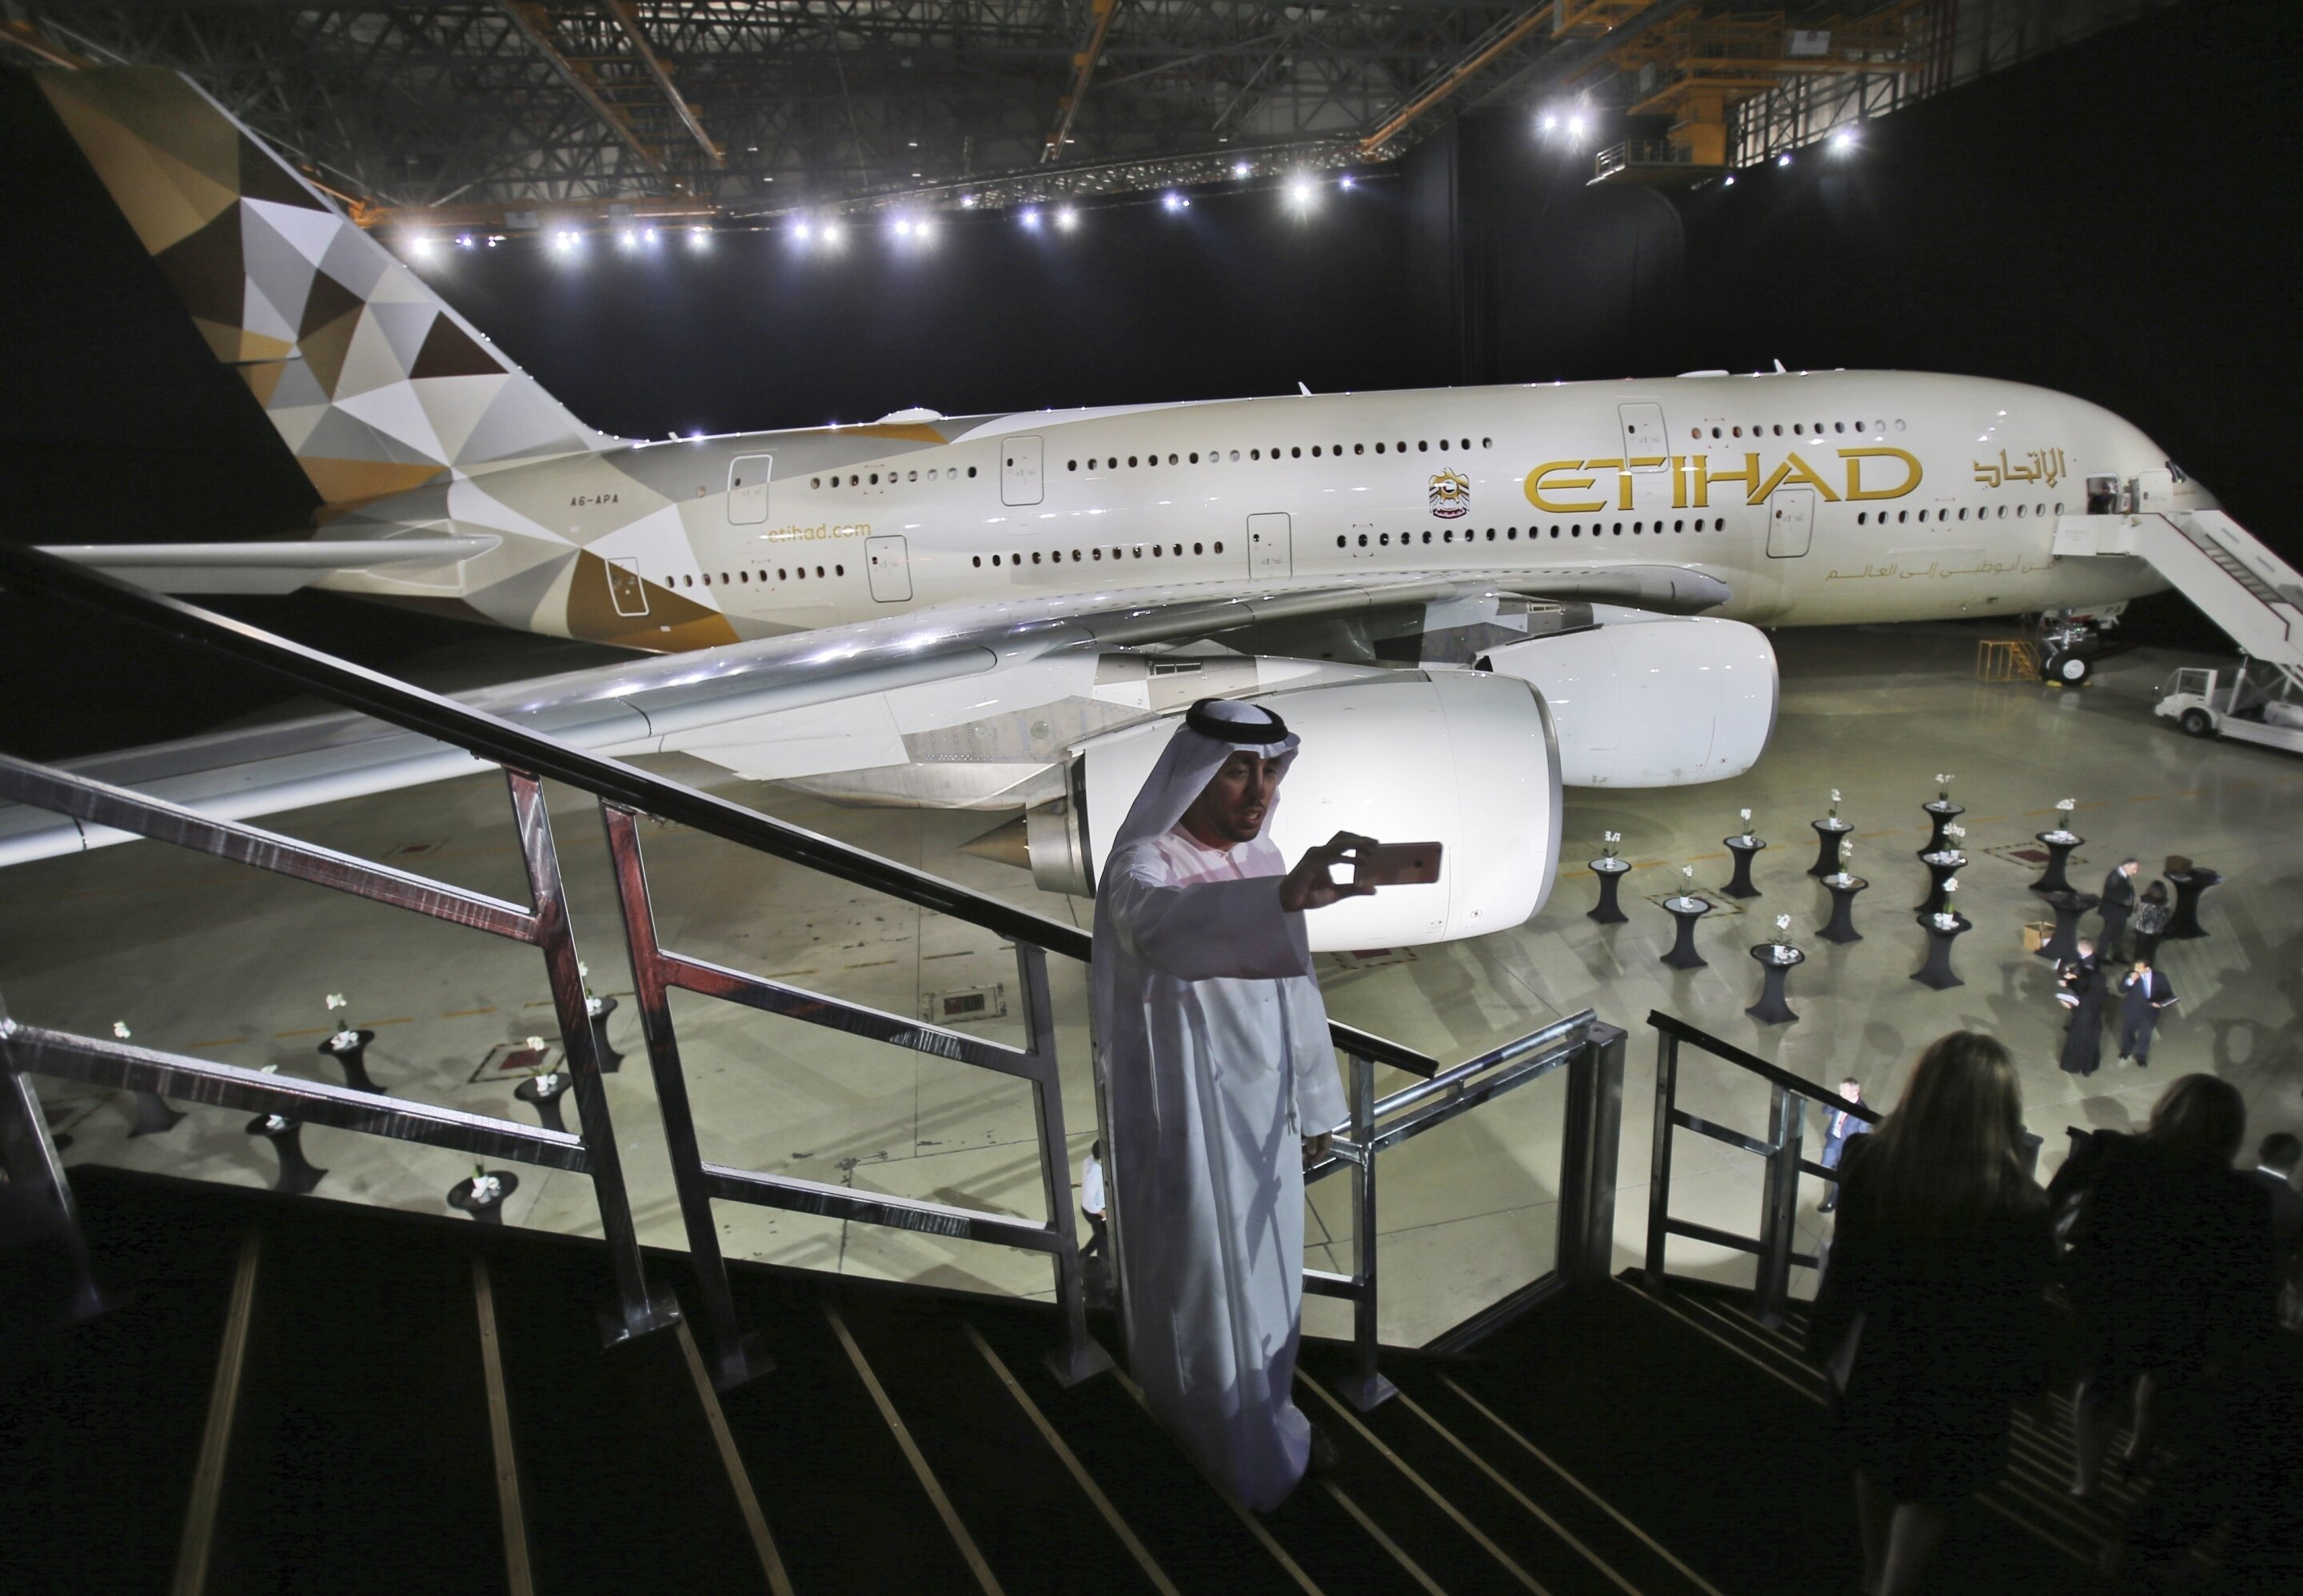 Abu Dhabi’s Etihad carrier posts $476M loss amid pandemic